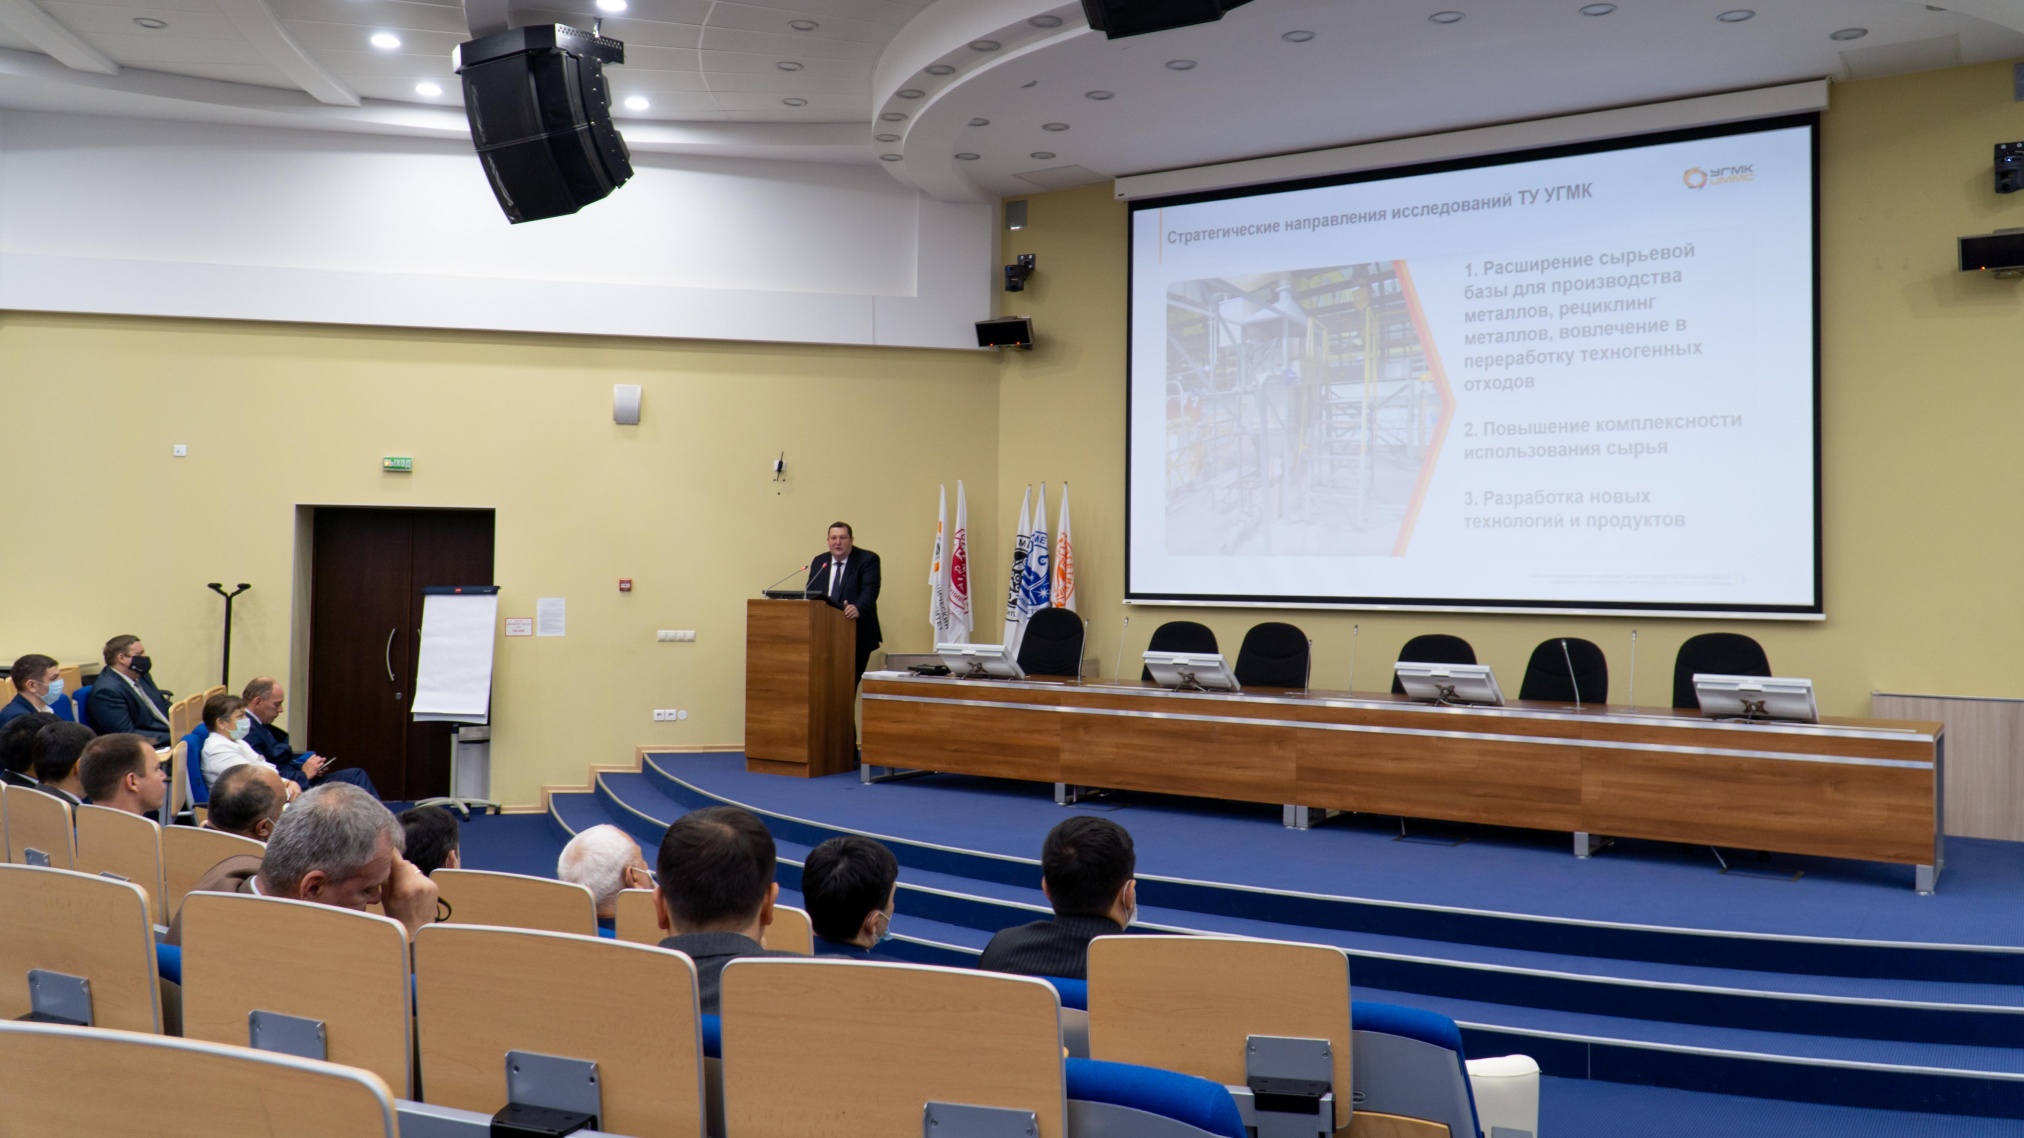 Технический университет УГМК посетили представители УзГЕОРАНГМЕТЛИТИ - фото